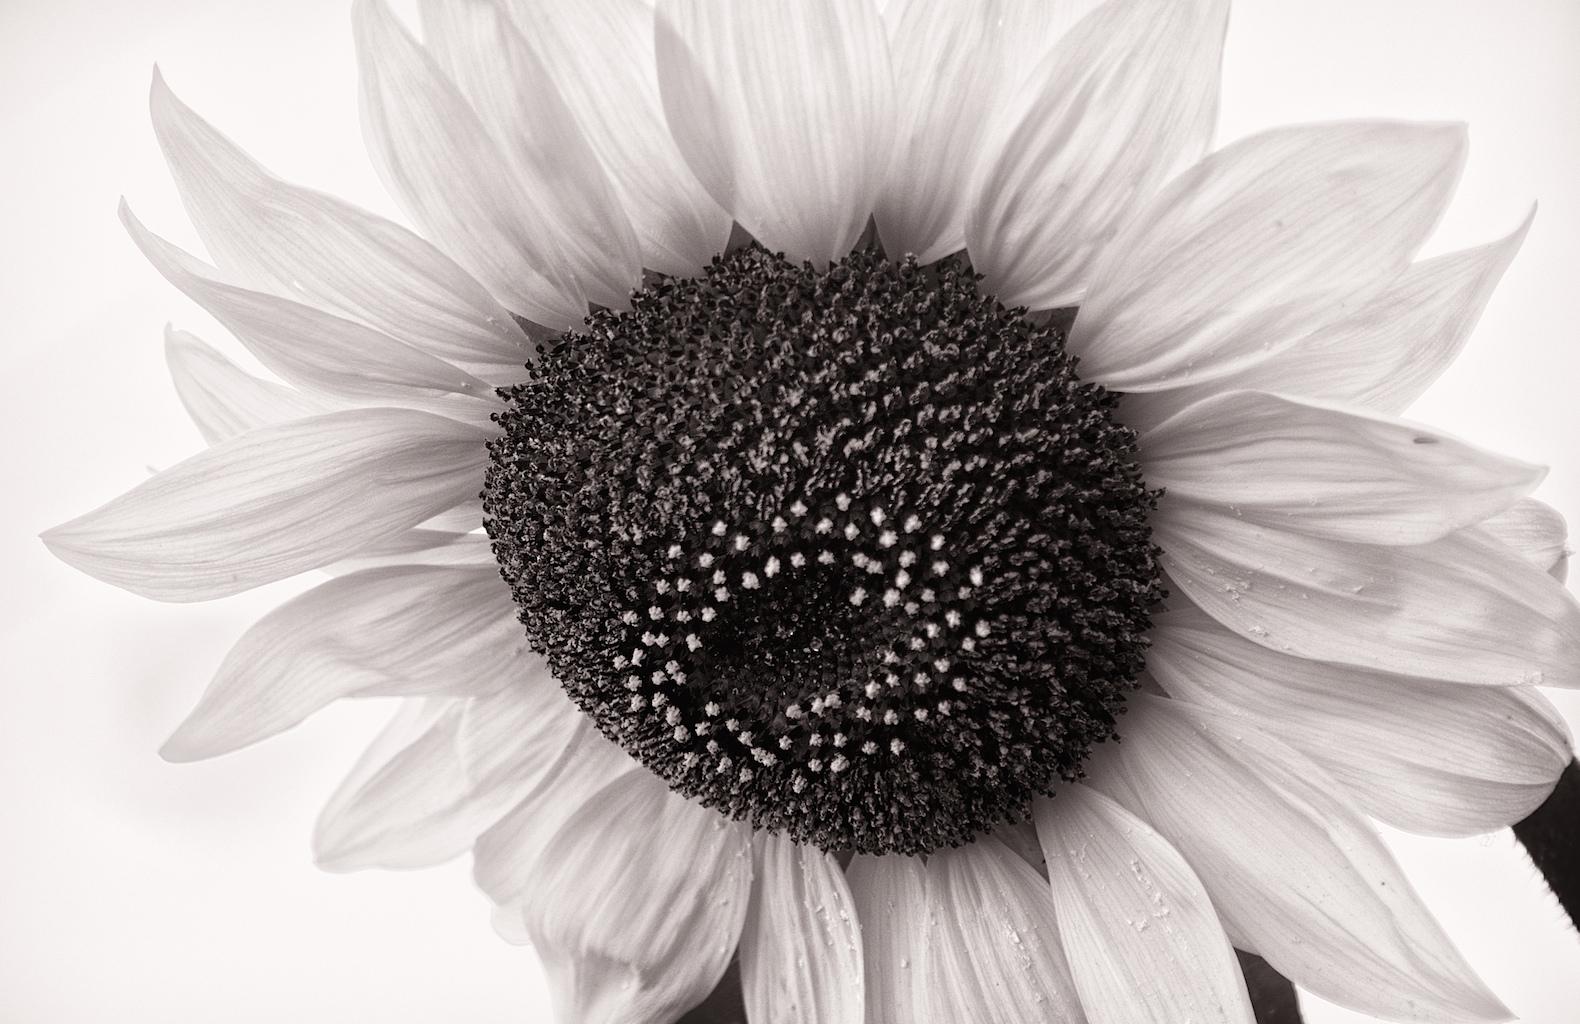 SunflowerBretDoss201301